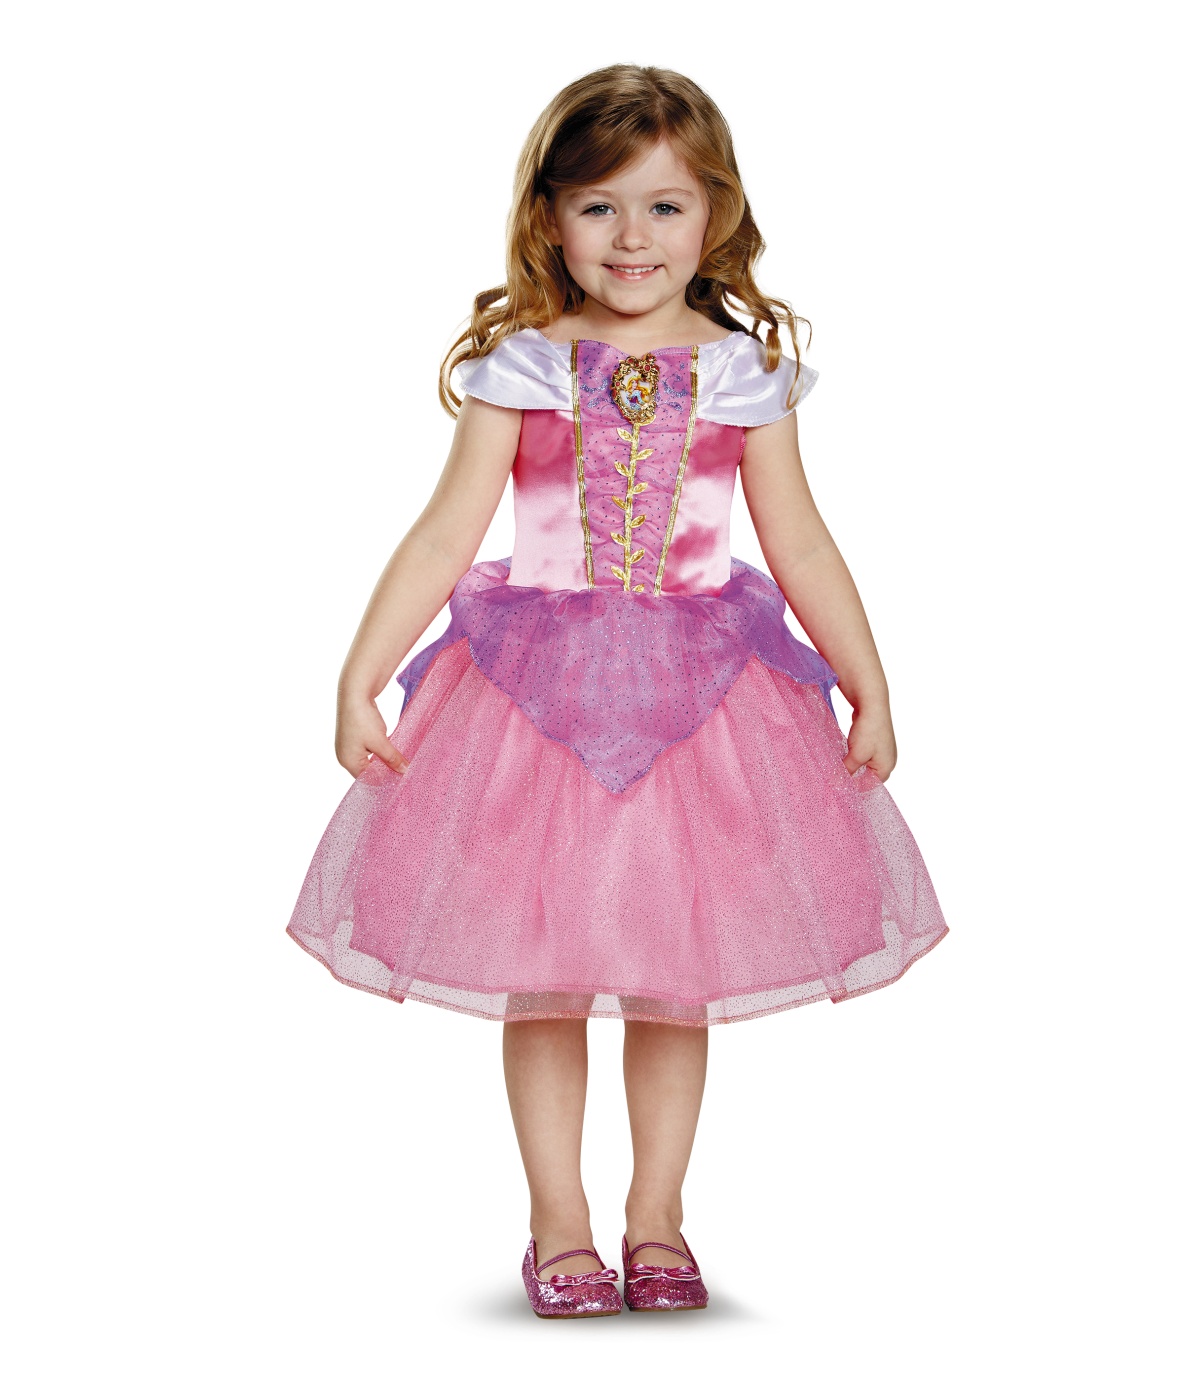  Girls Aurora Disney Dress Costume